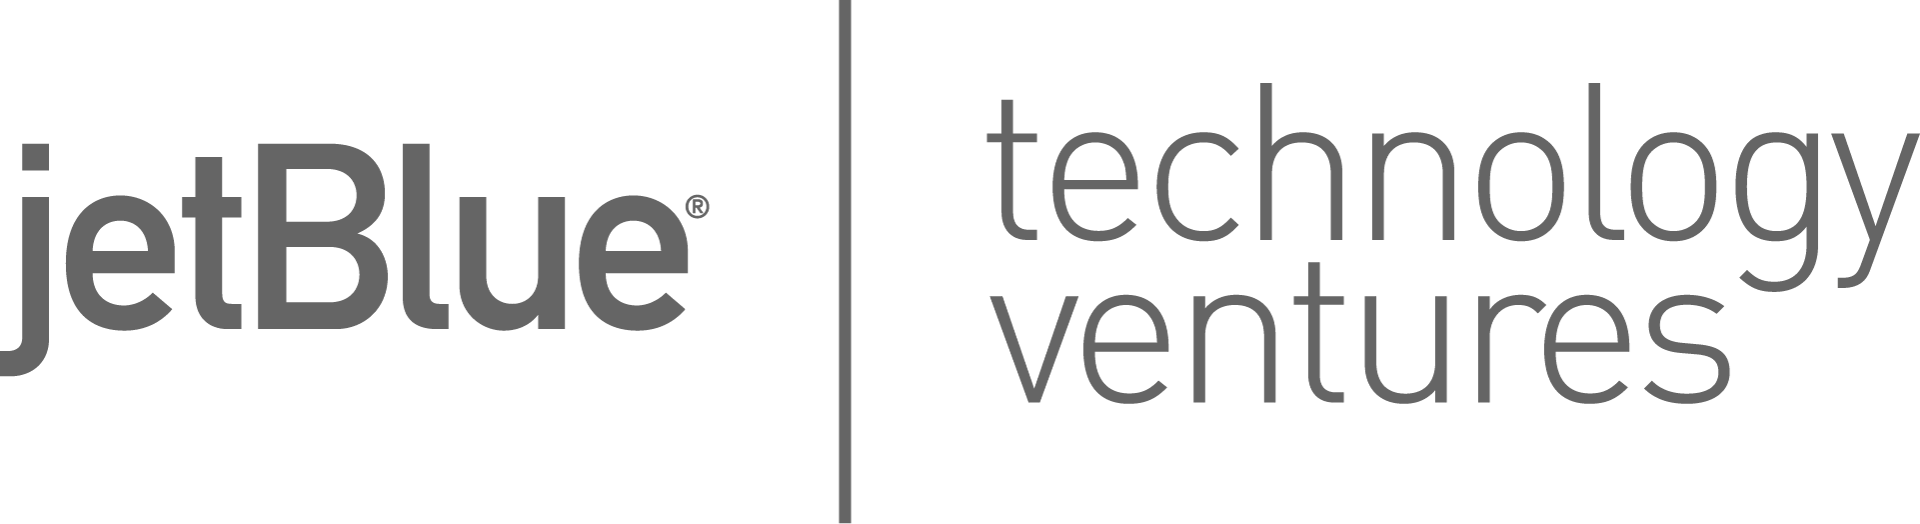 jetblue-technology-ventures-logo-silicon-valley